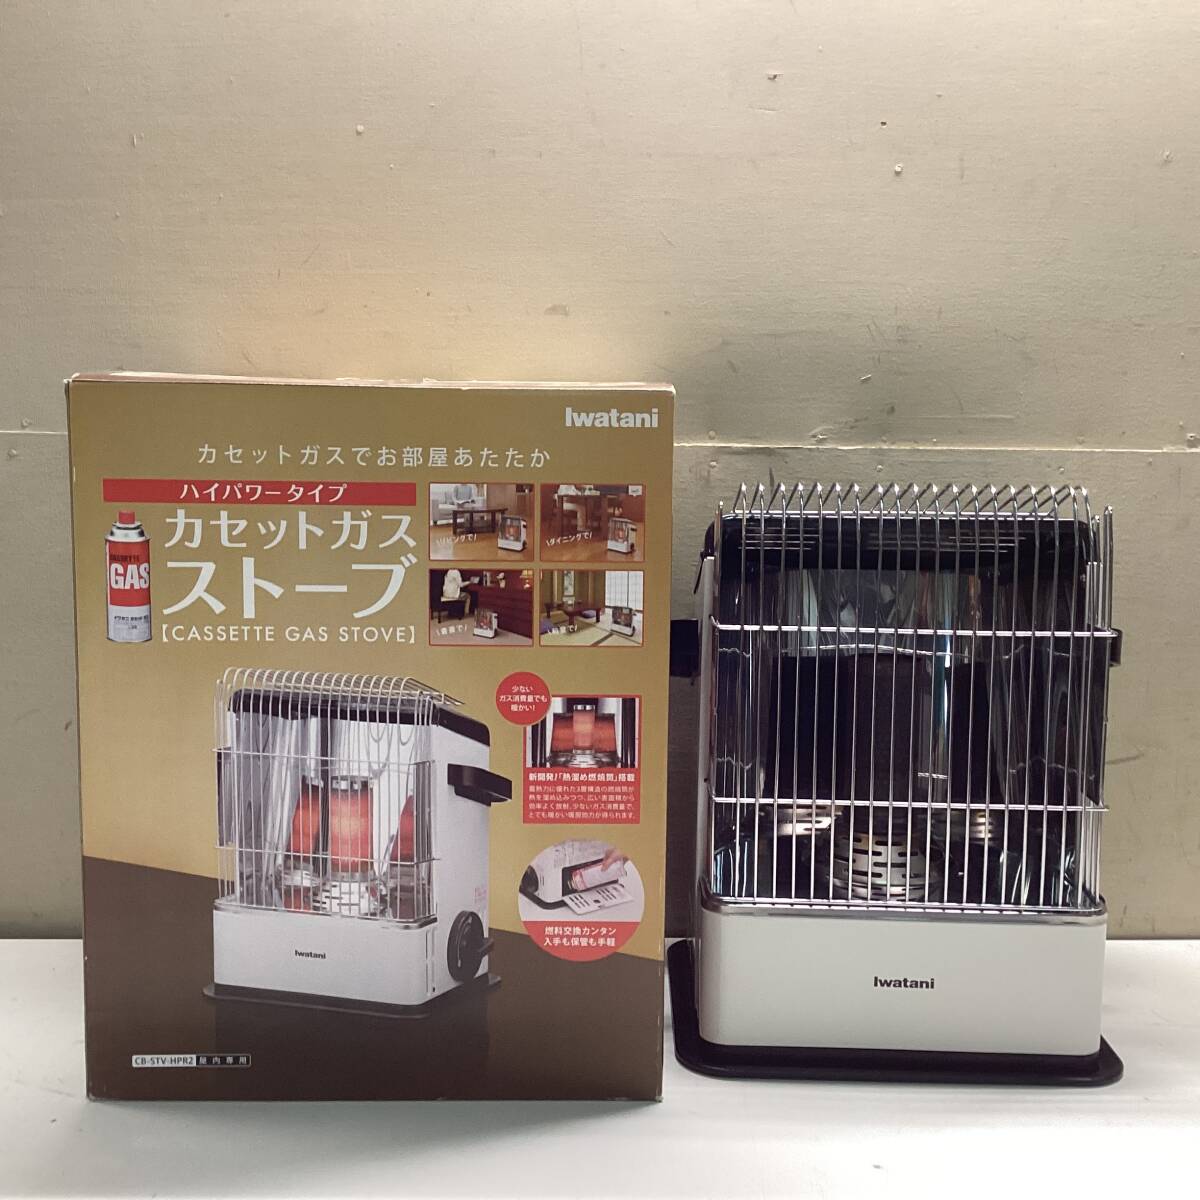 Iwatani Iwatani кассета газовая печка газовая печка нагревательный прибор CB-STV-HPR2 текущее состояние 